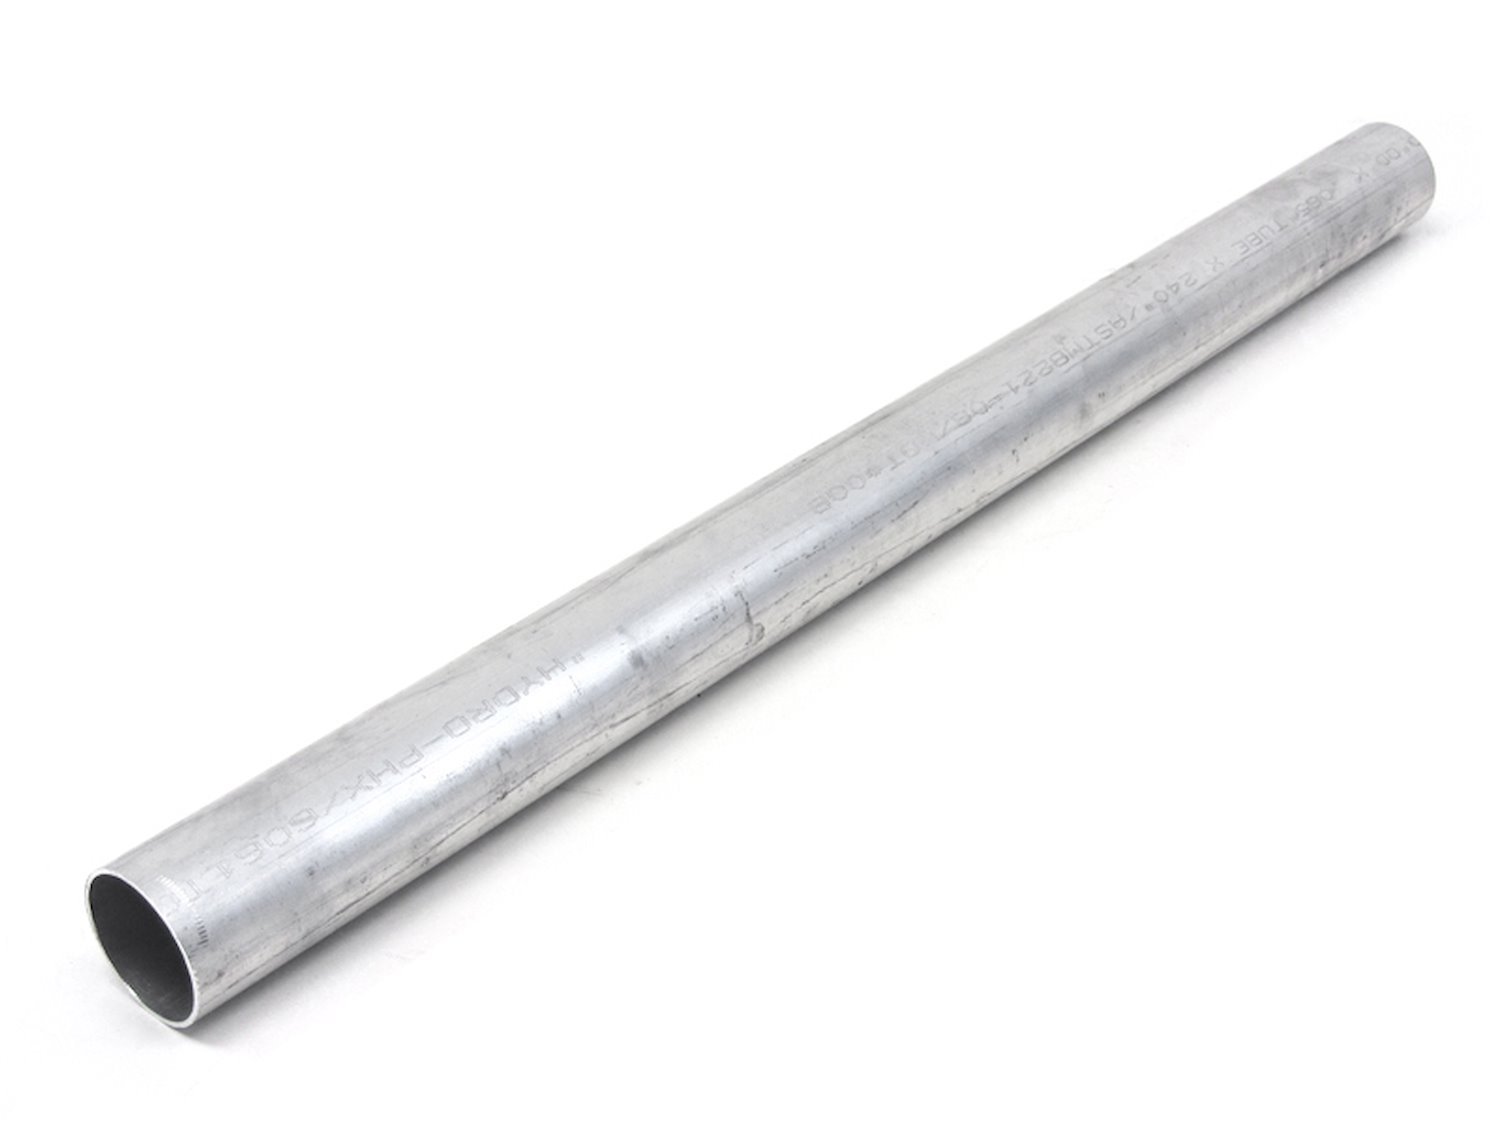 AST-2F-187 Aluminum Tubing, 6061 Aluminum, Straight Tubing, 1-7/8 in. OD, Seamless, Raw Finish, 2 ft. Long